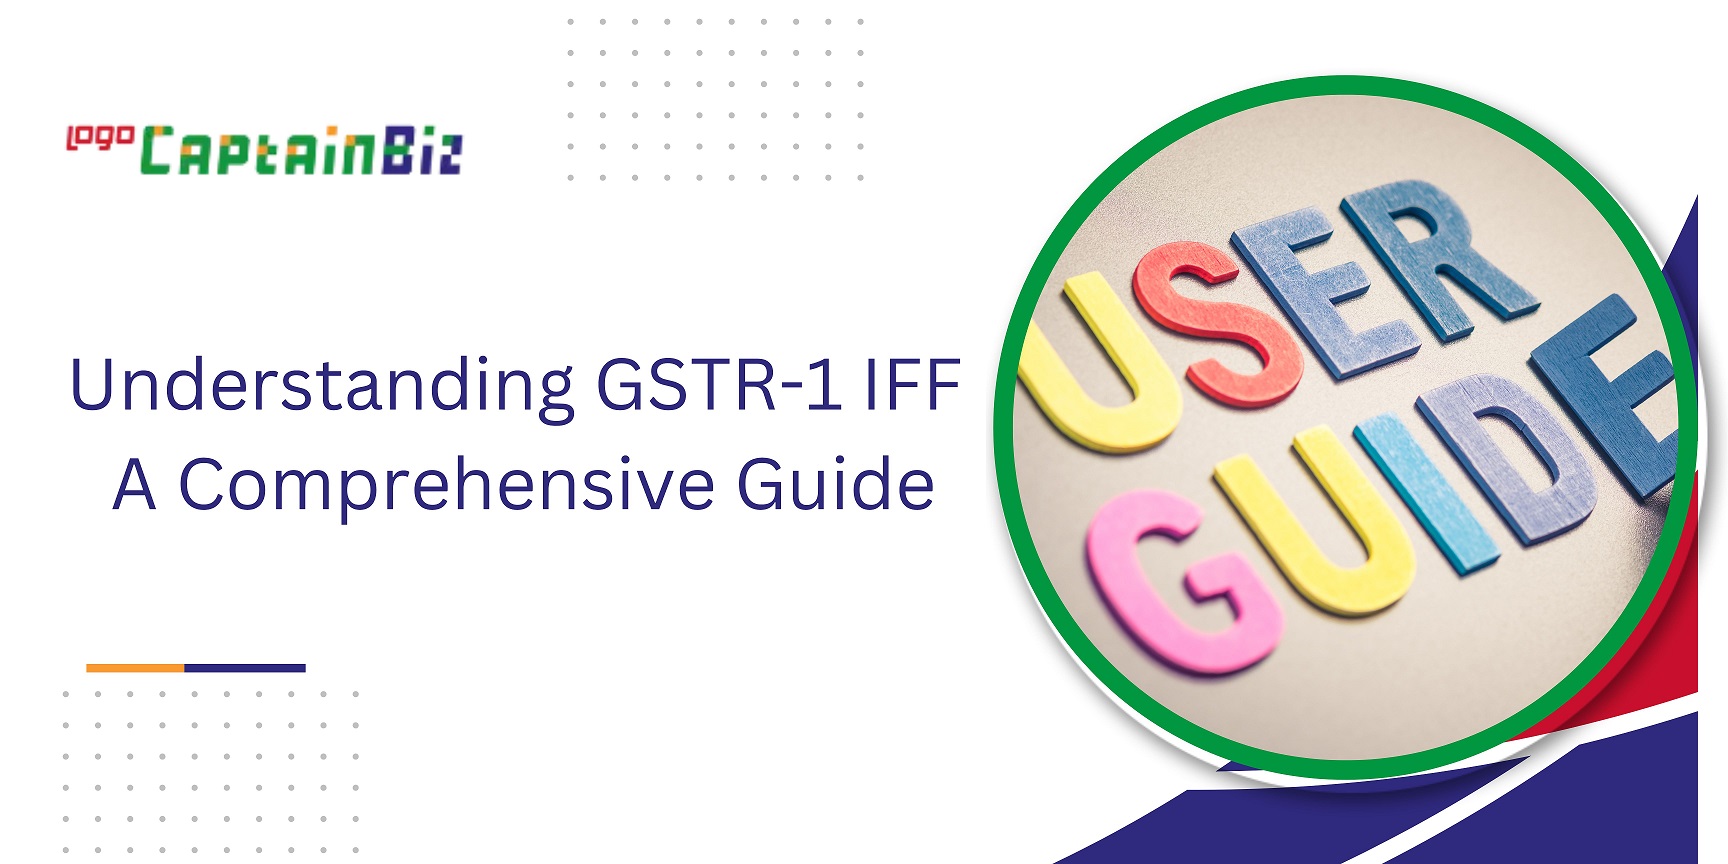 CaptainBiz: Understanding GSTR-1 IFF A Comprehensive Guide